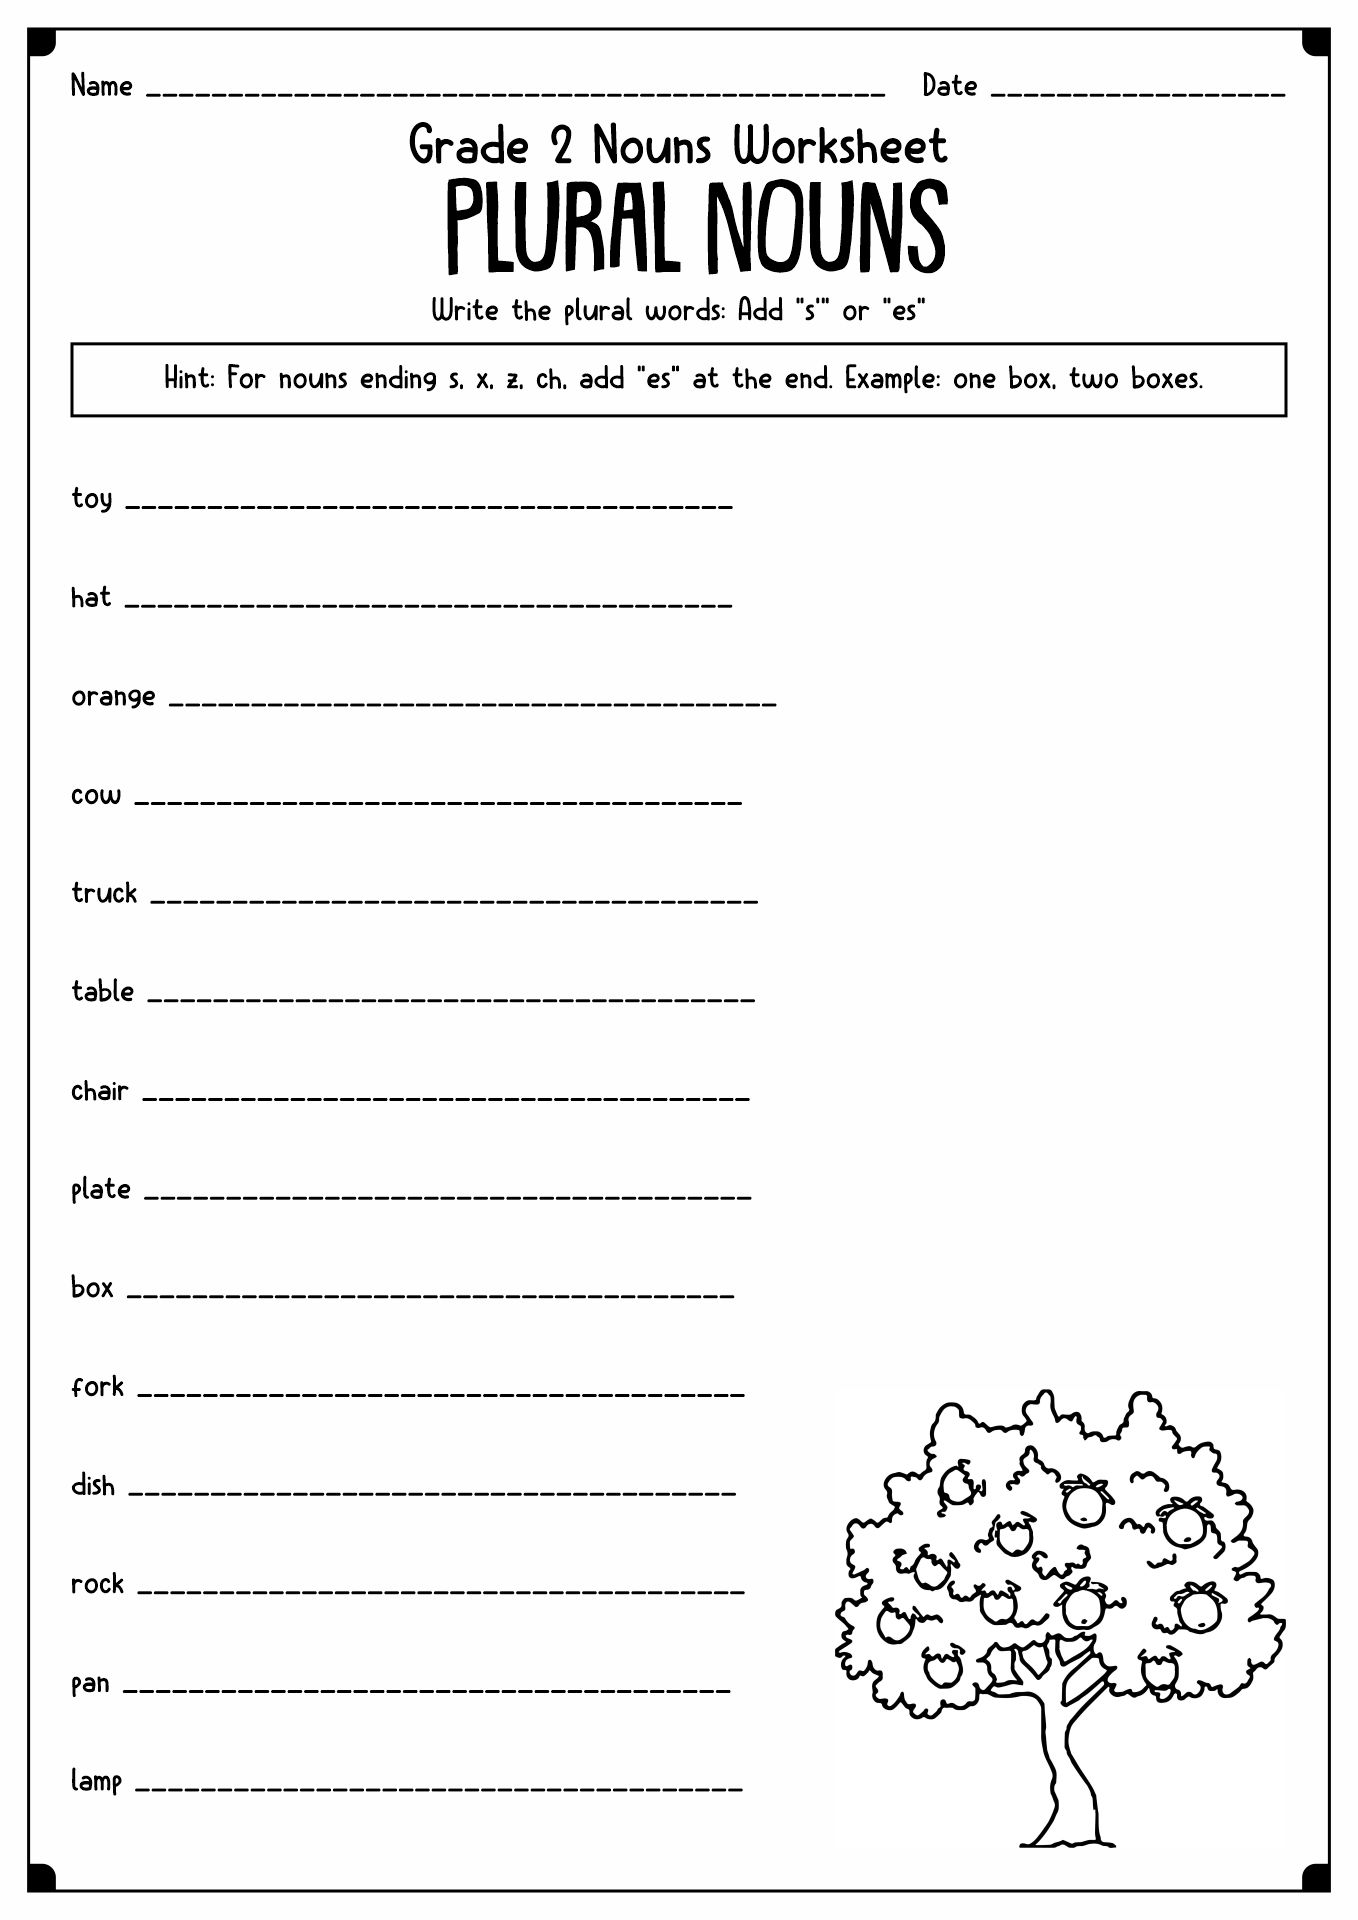 Singular Plural Nouns Worksheets Image